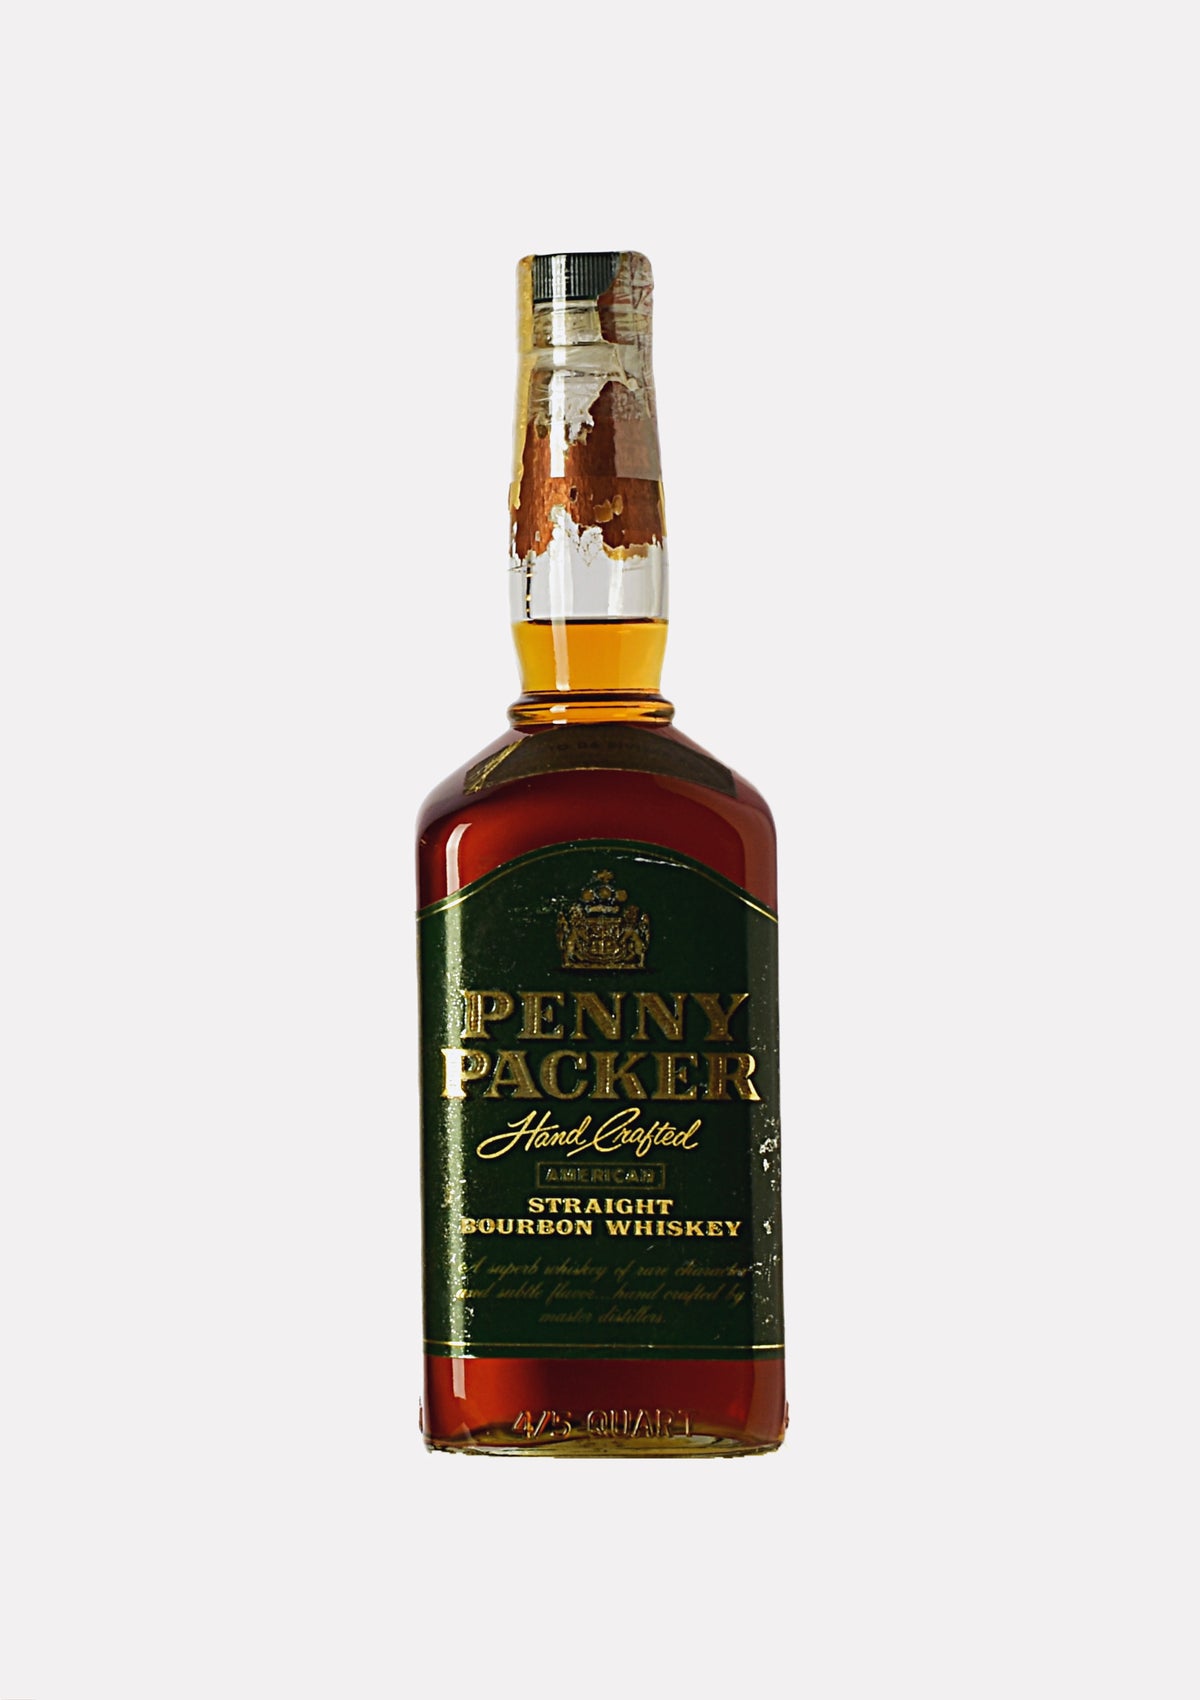 Penny Packer Straight Bourbon Whiskey